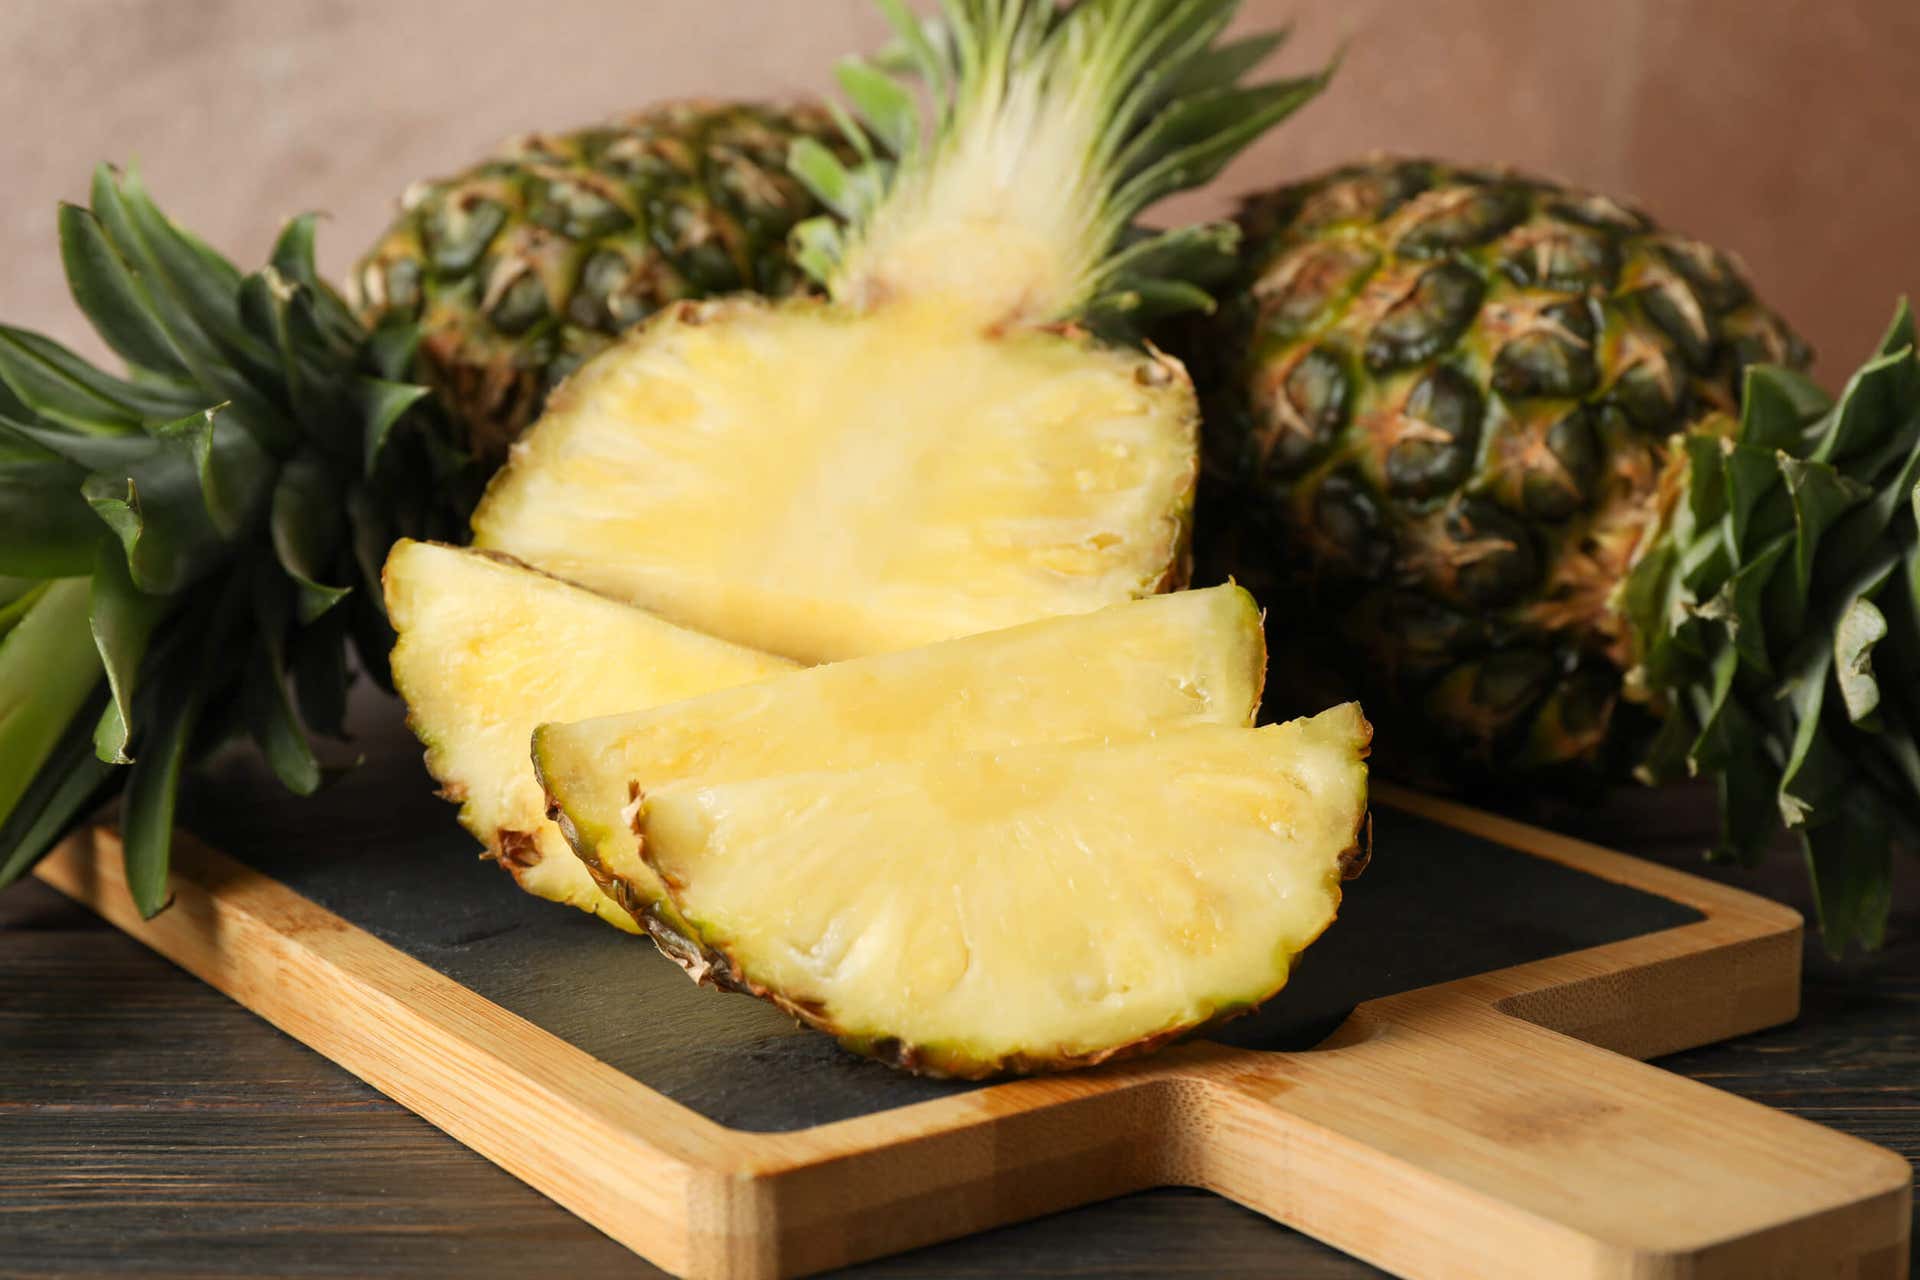 Pineapple with salak.